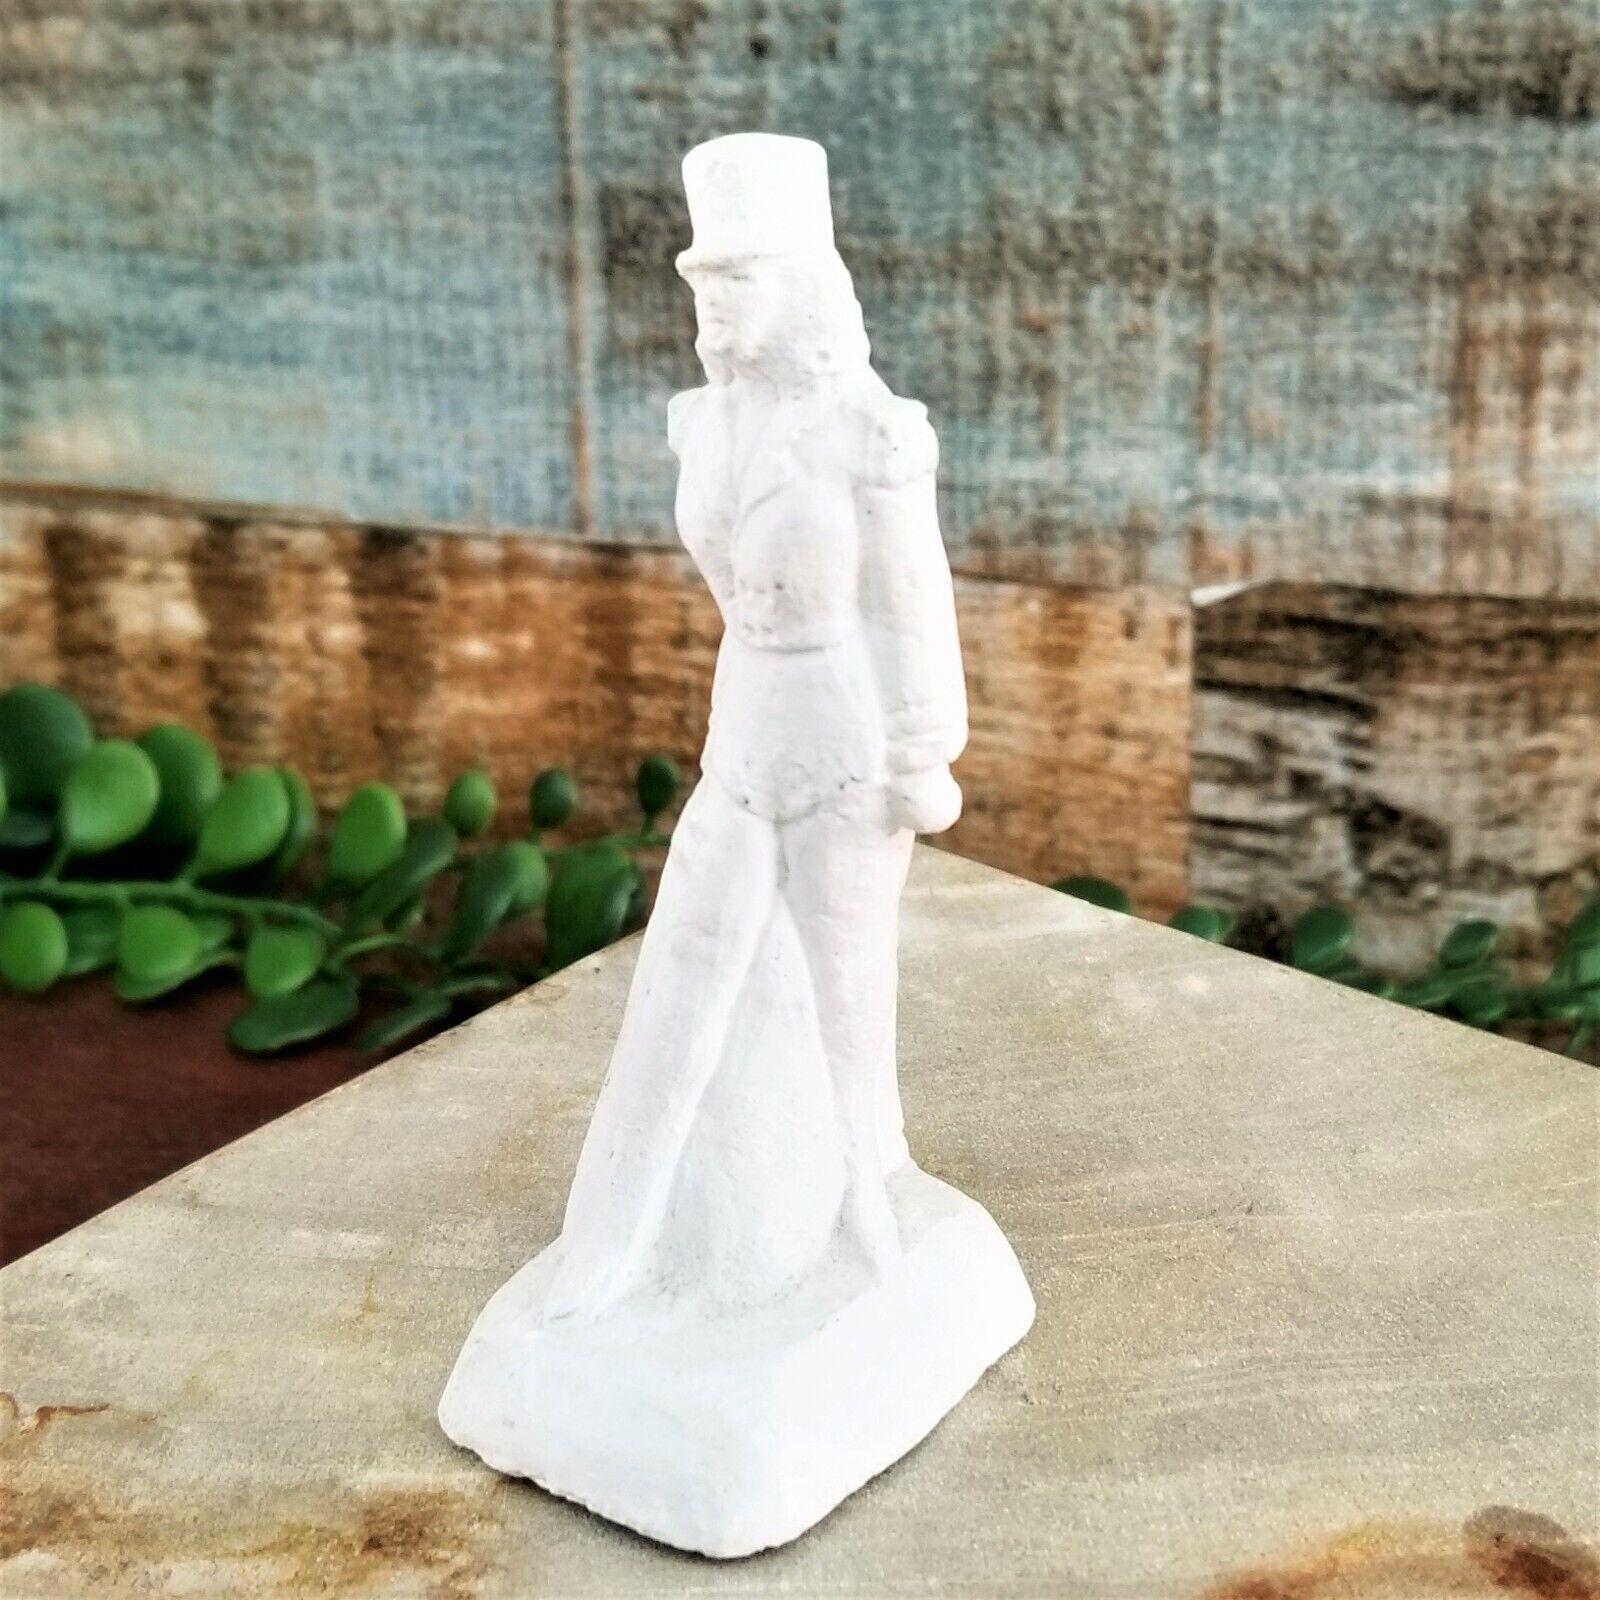 Vintage Mold Craft Woman Soldier Officer Chalkware Figurine for Village Dioramas